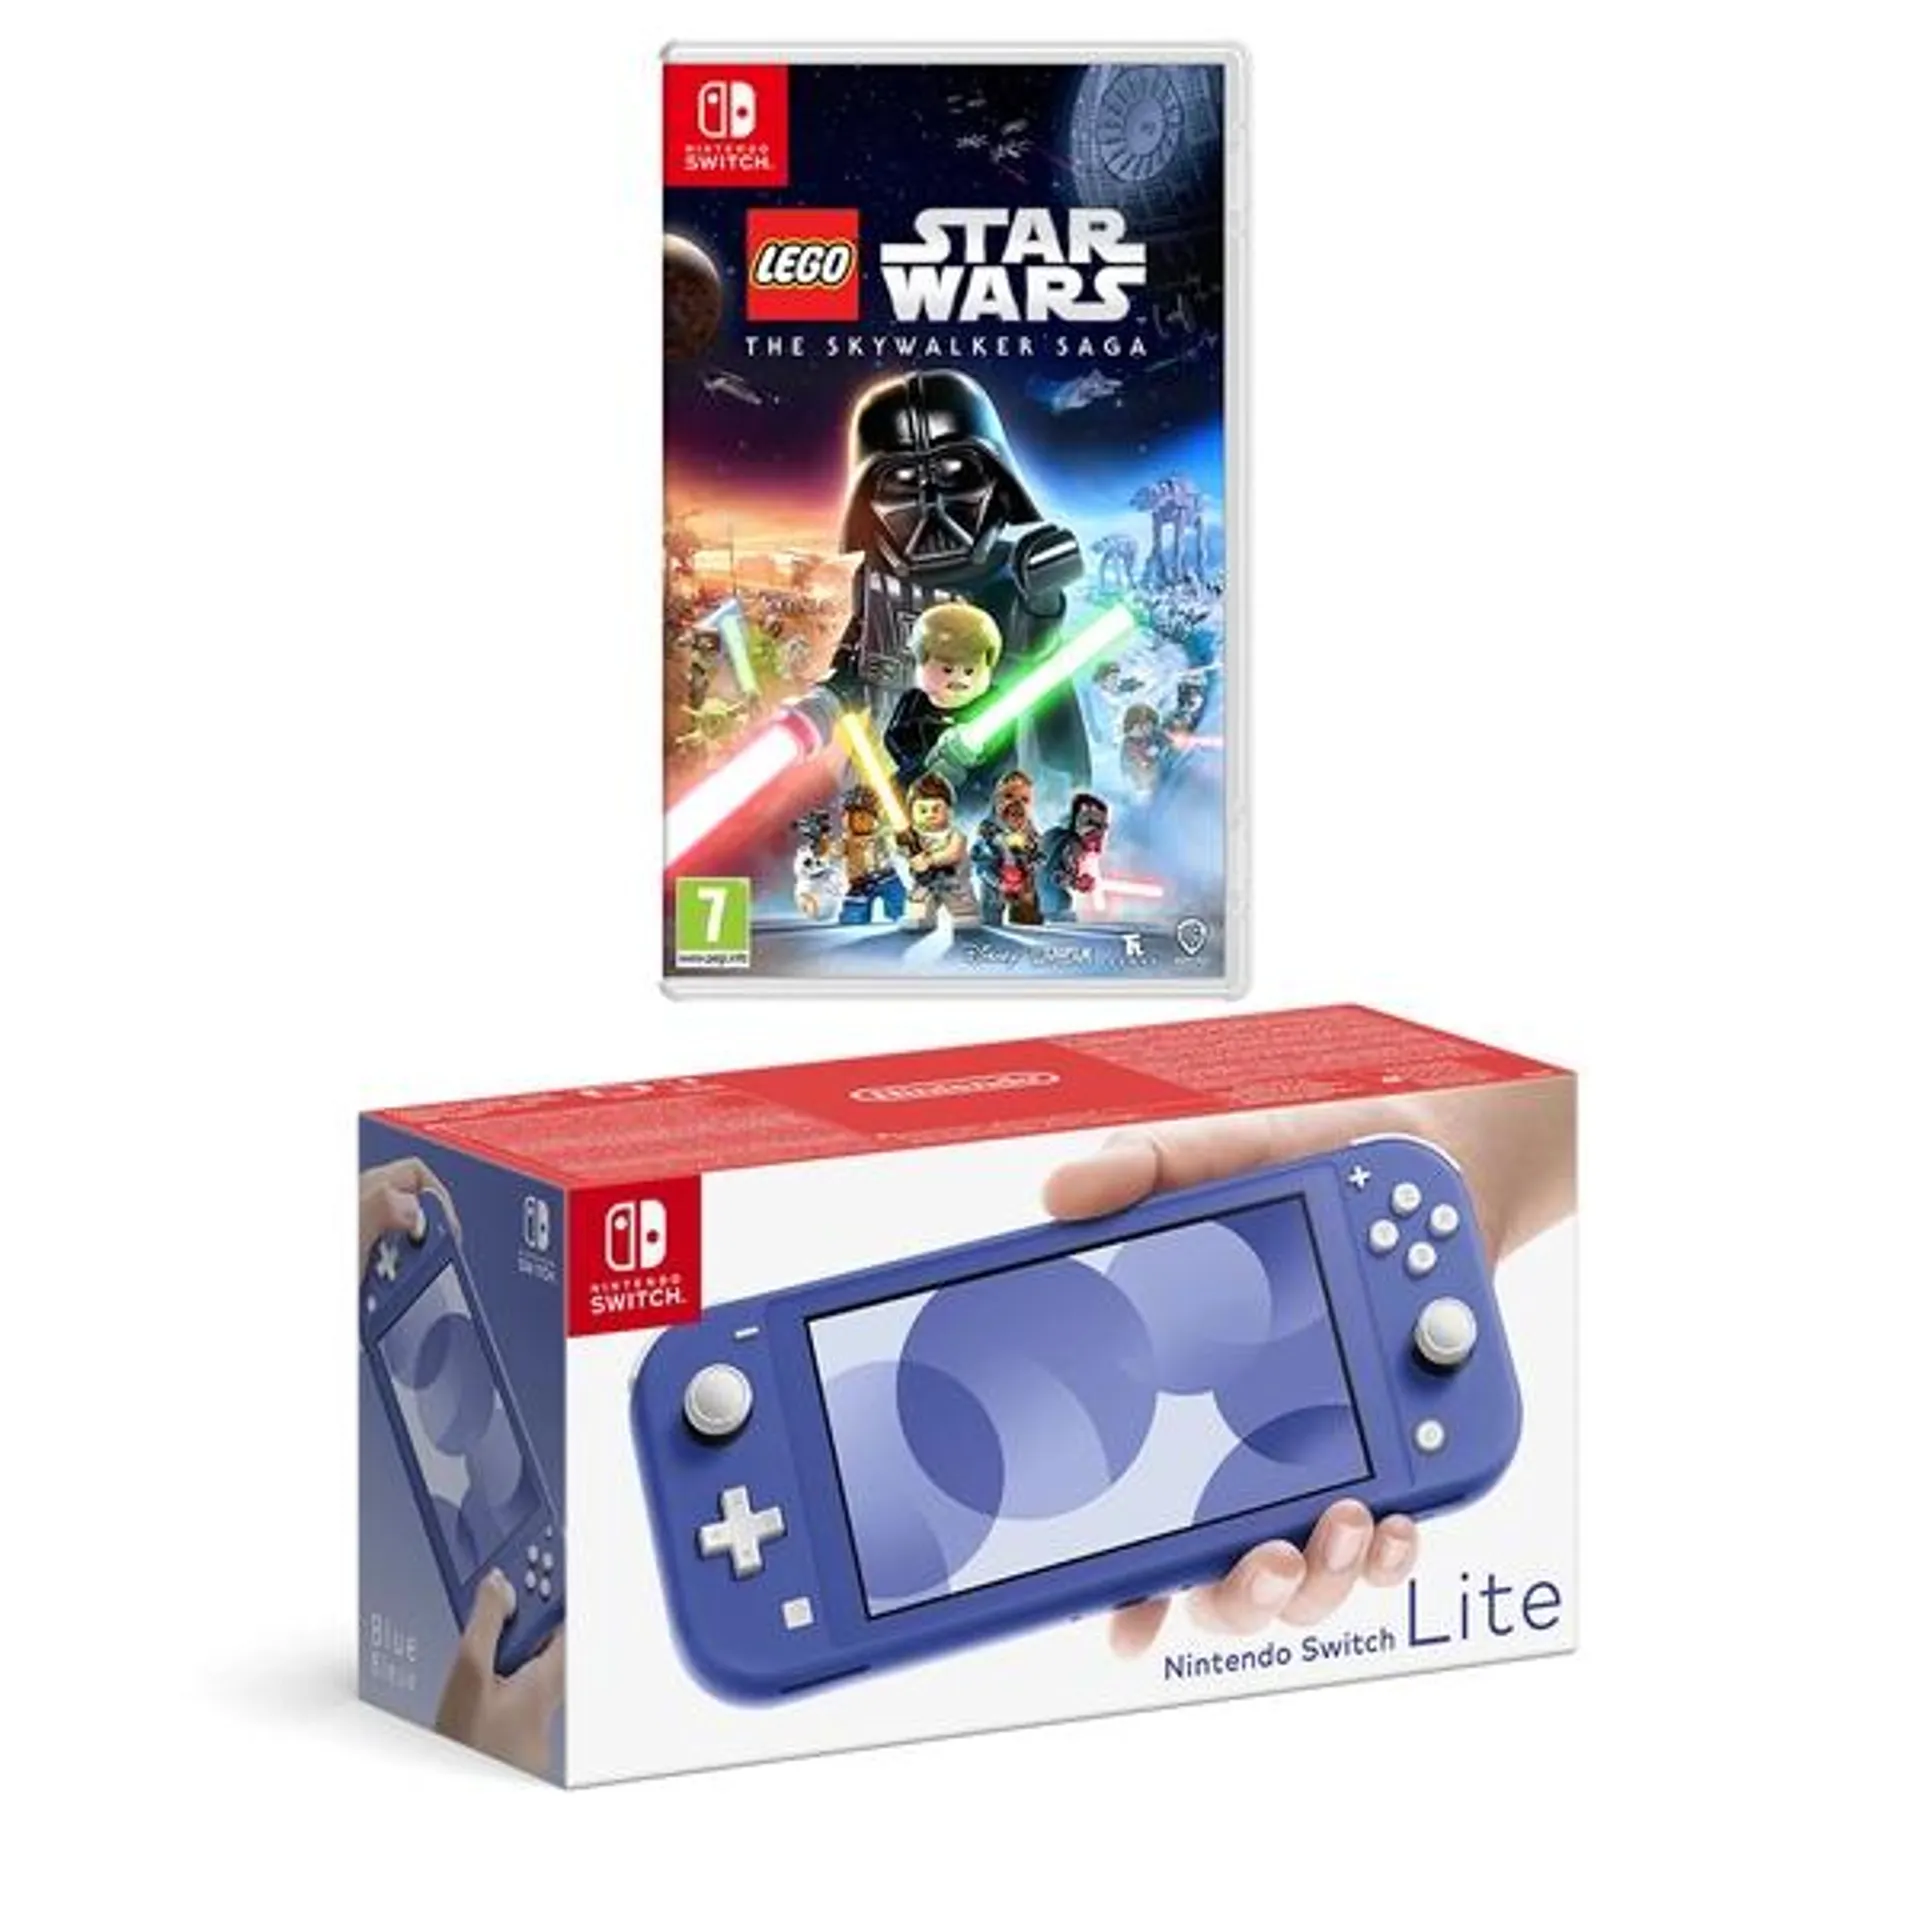 Nintendo Switch Lite (Blue) & LEGO Star Wars: The Skywalker Saga